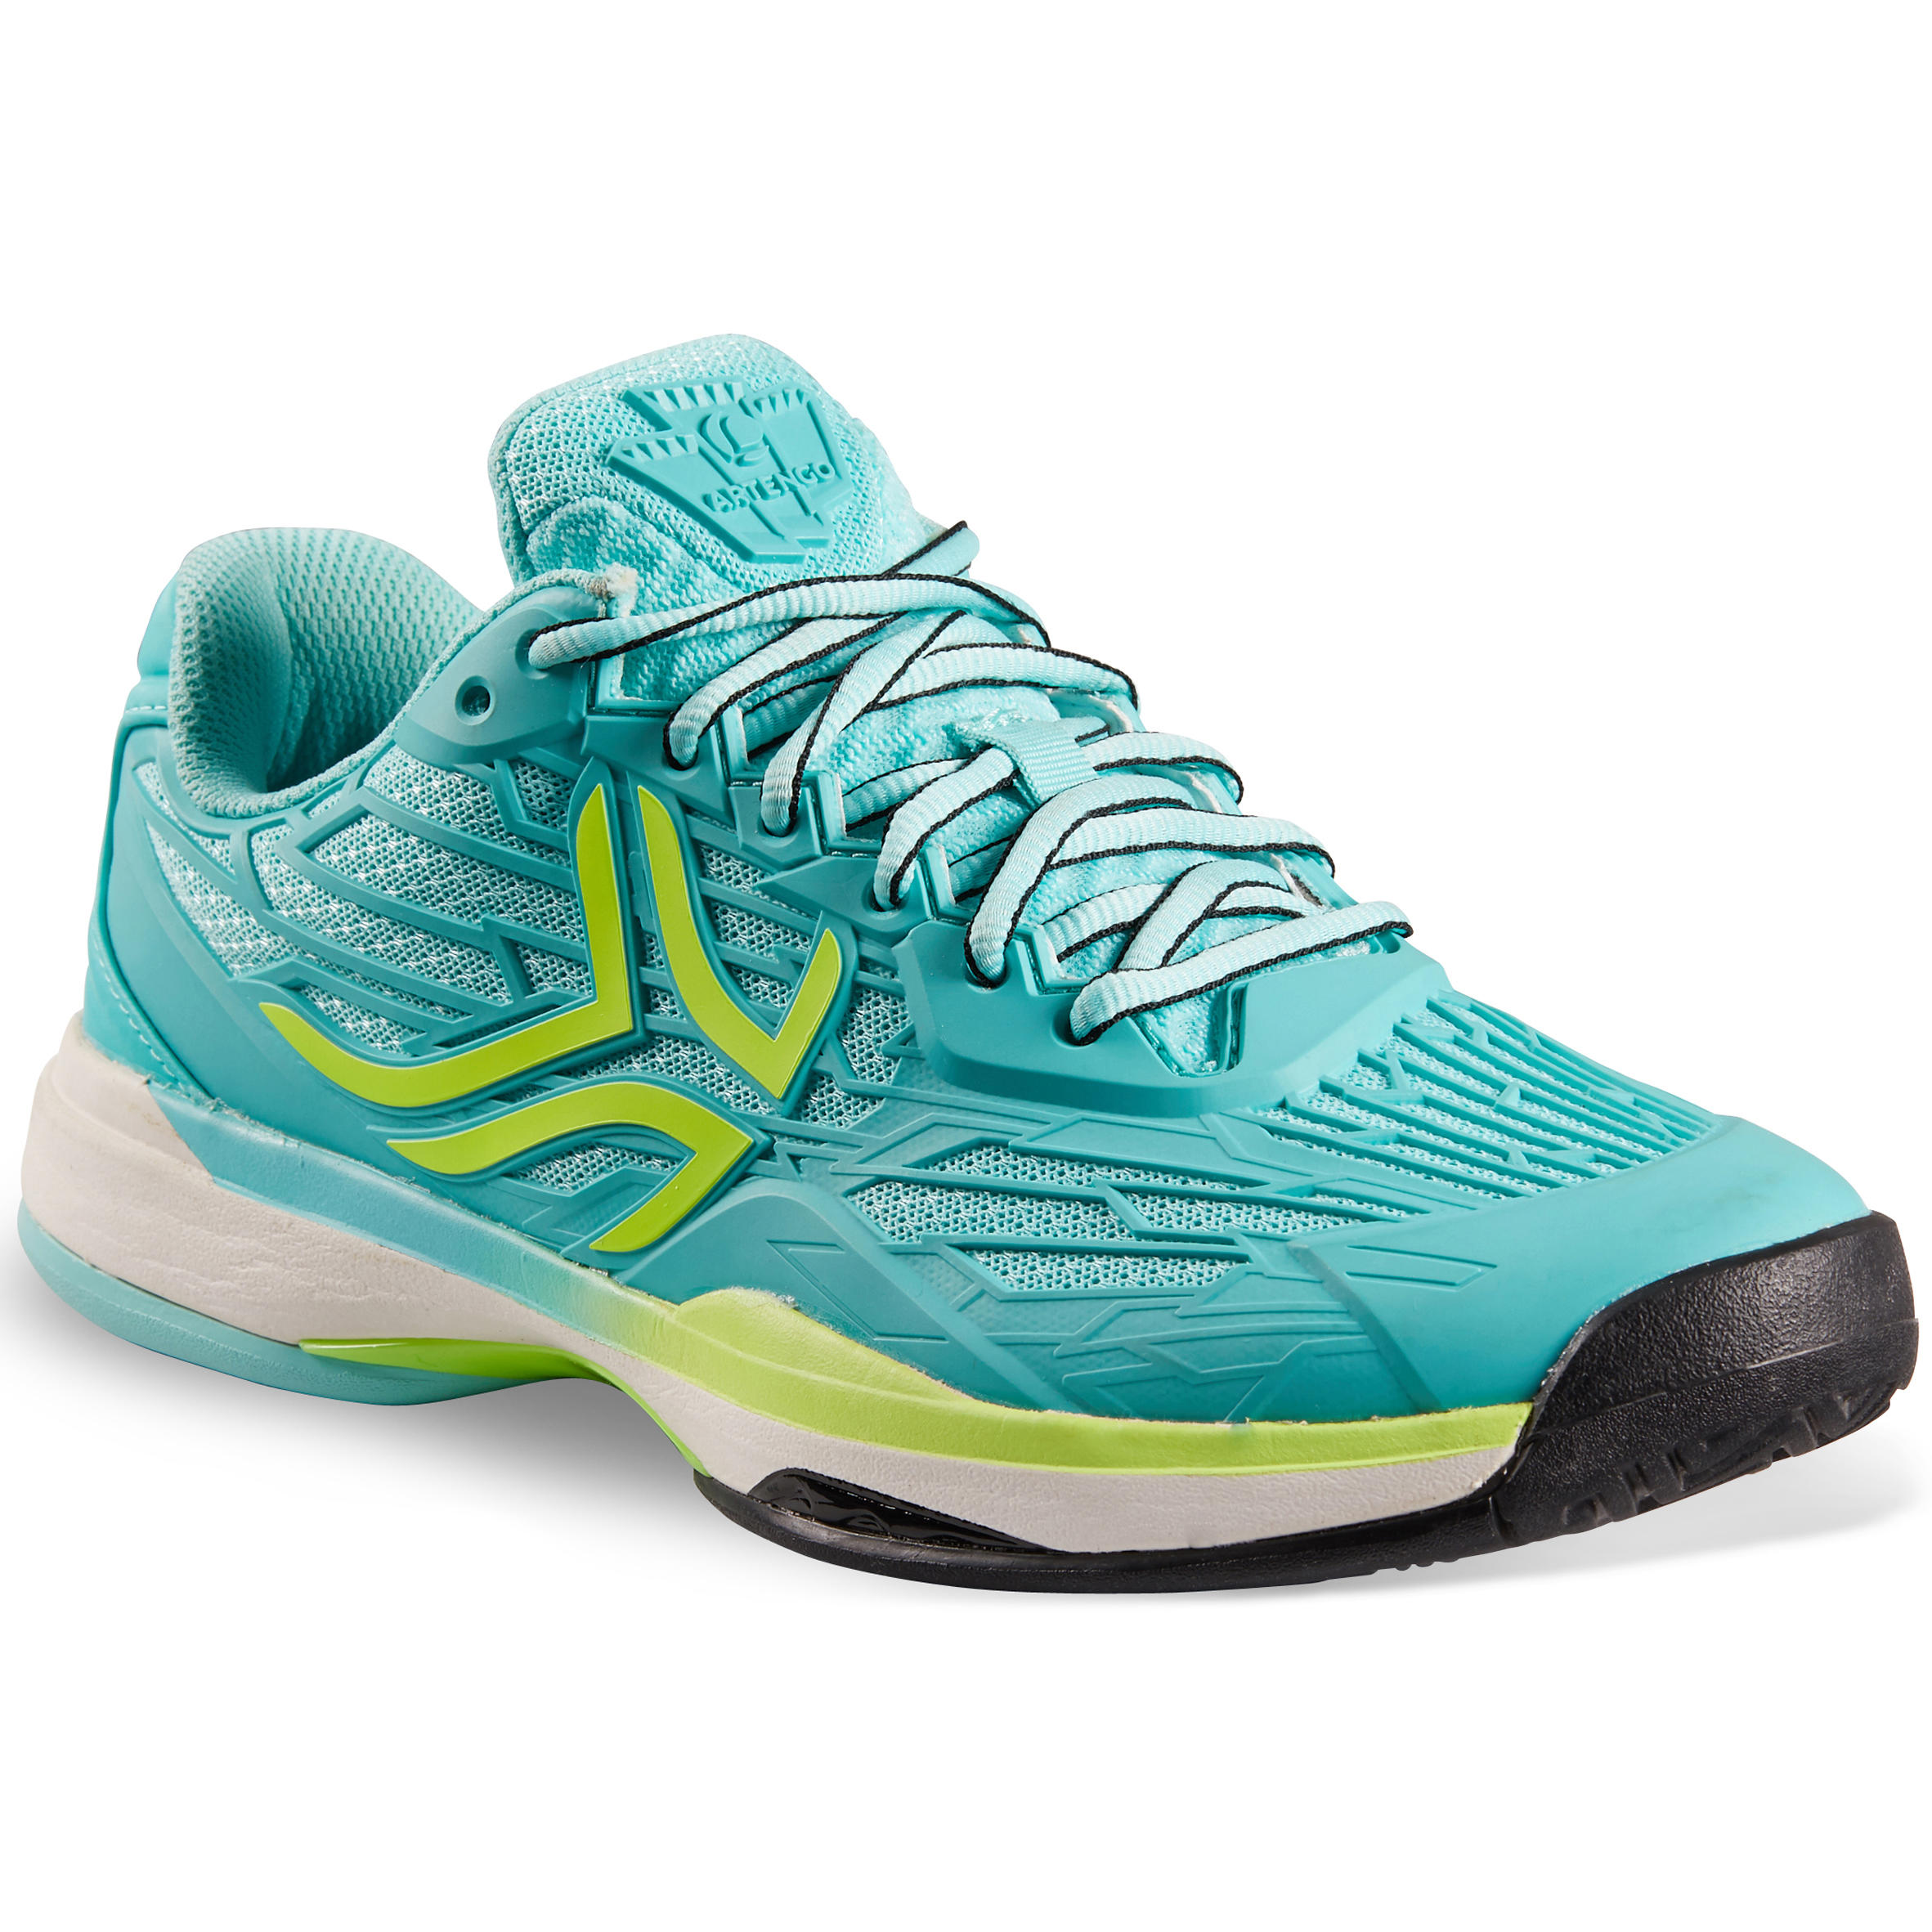 TS990 Women's Tennis Shoes - Turquoise